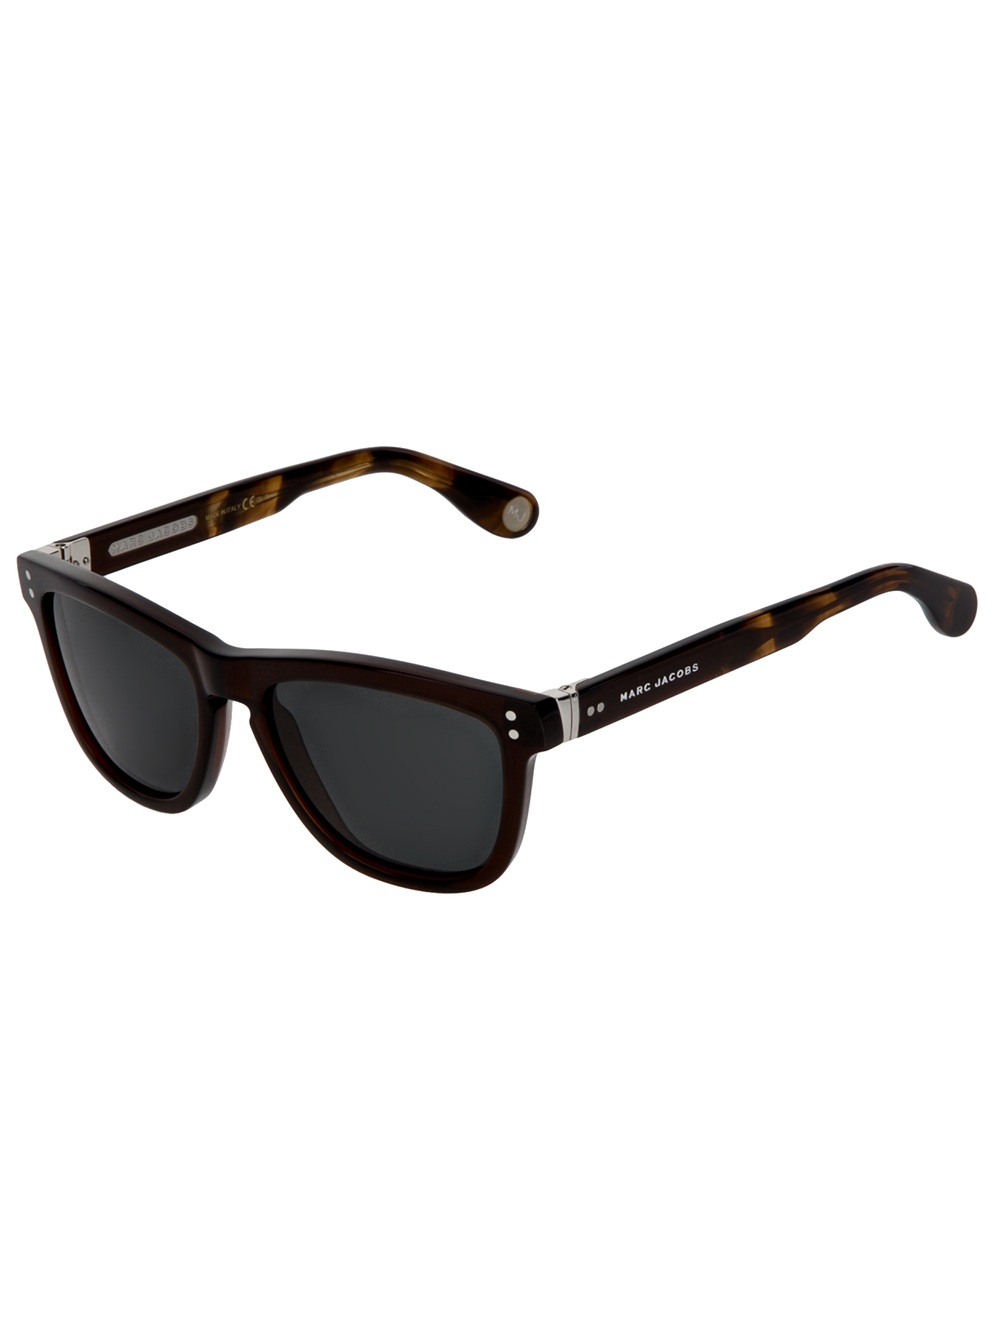 Marc Jacobs Wayfarer Sunglasses in 